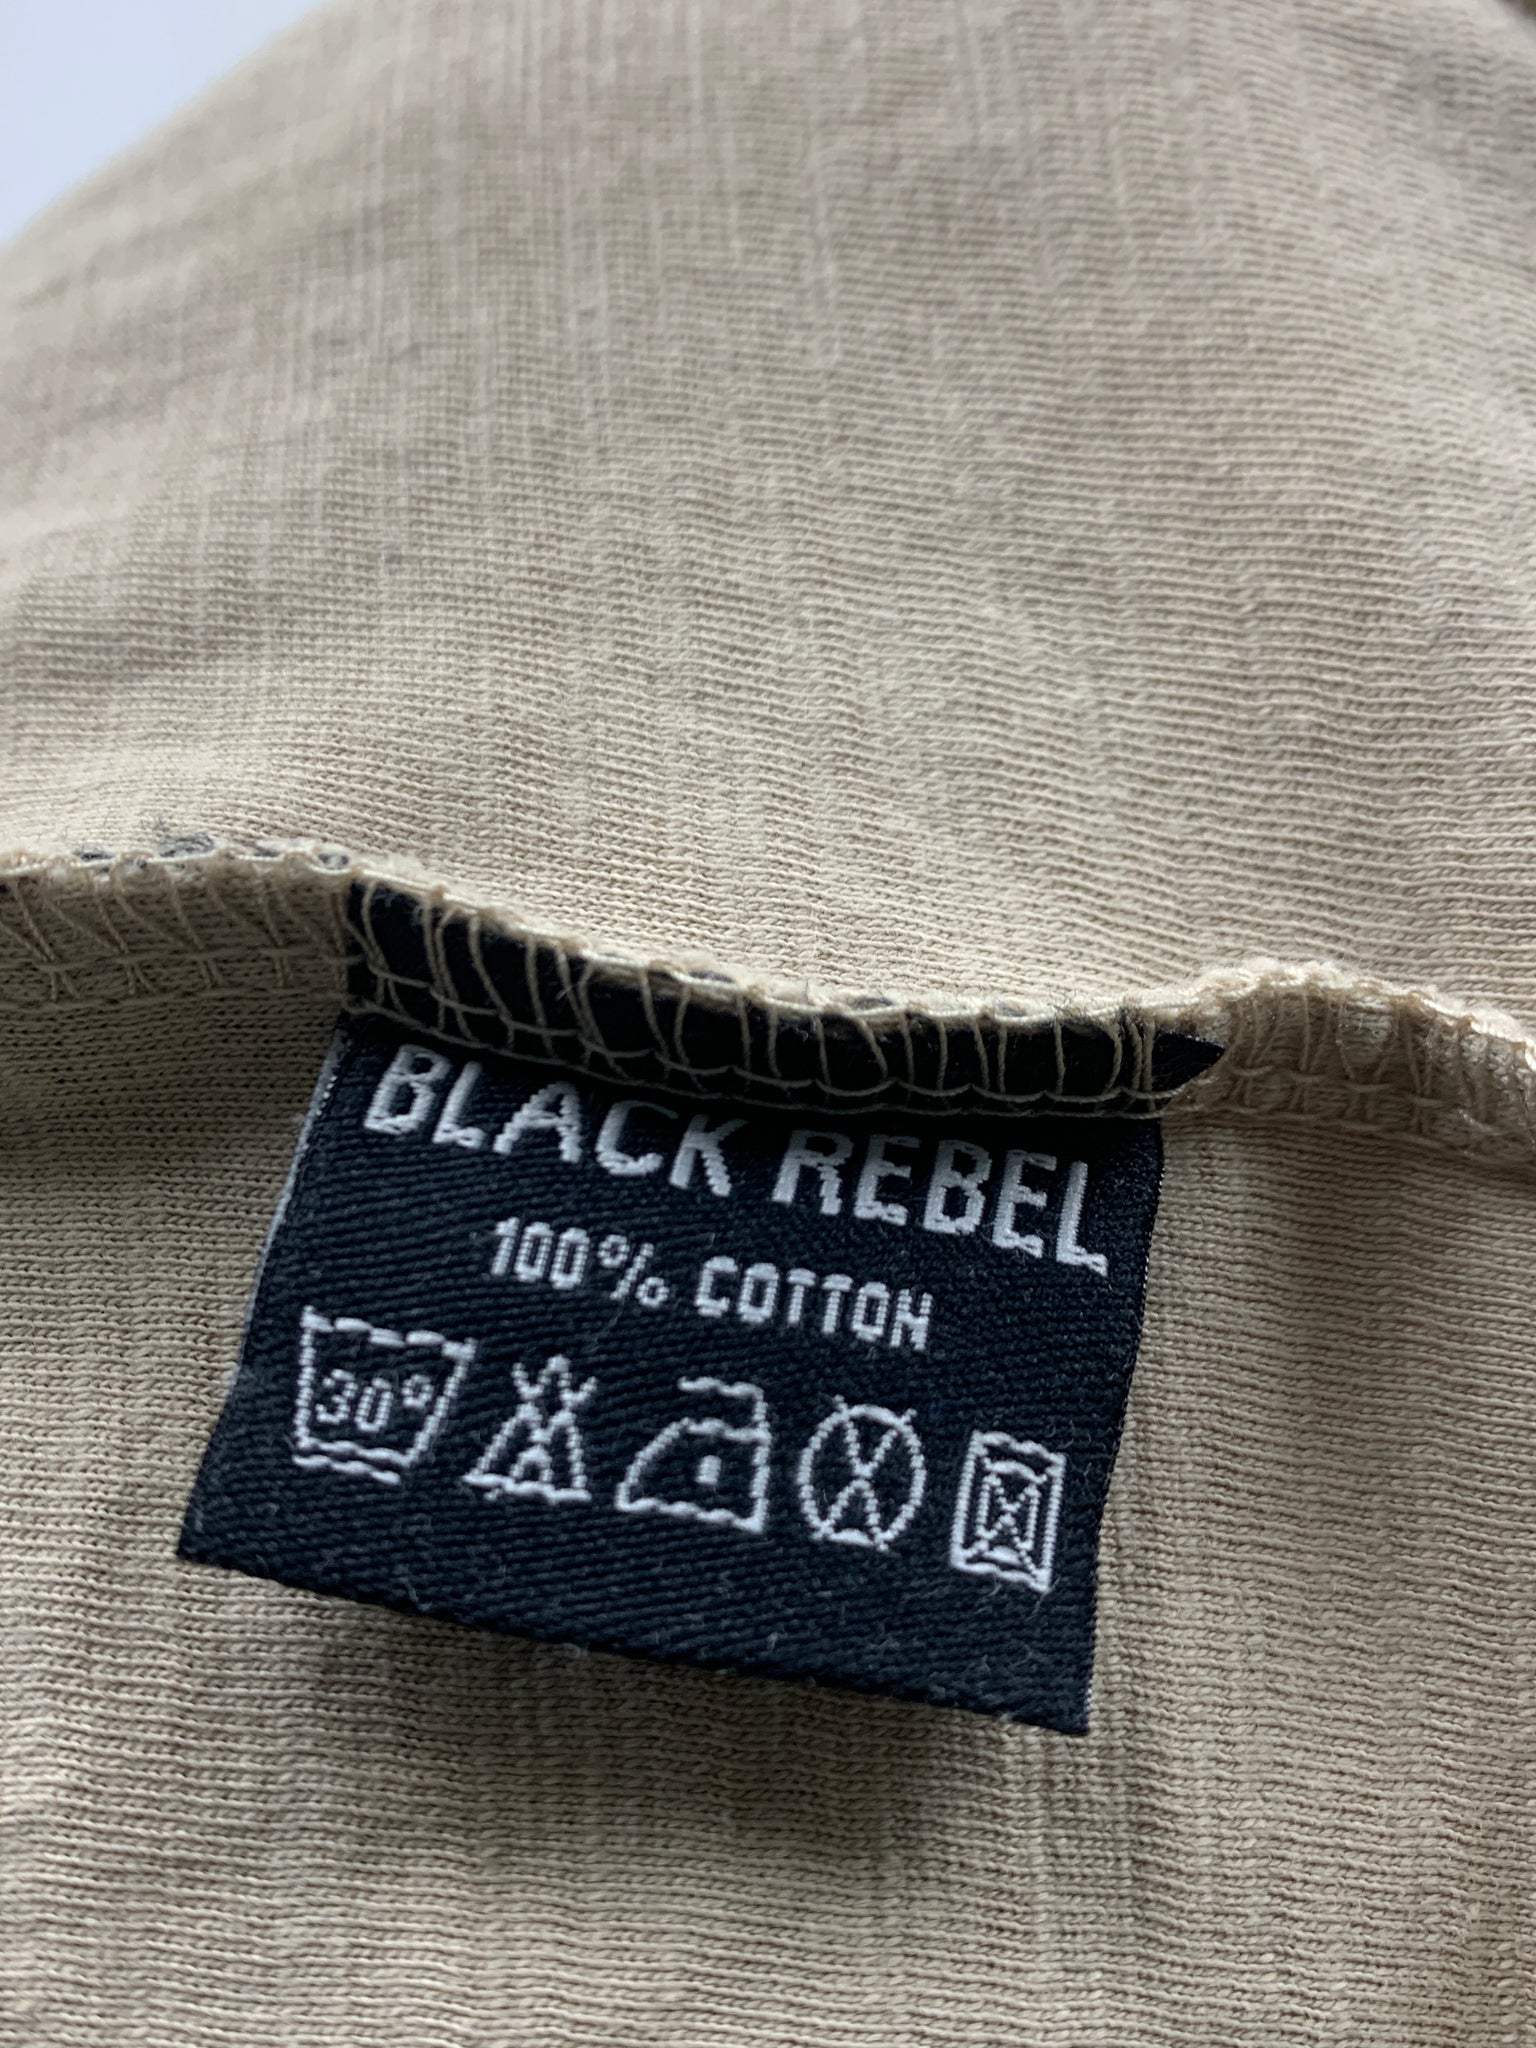 Black rebel t-shirt